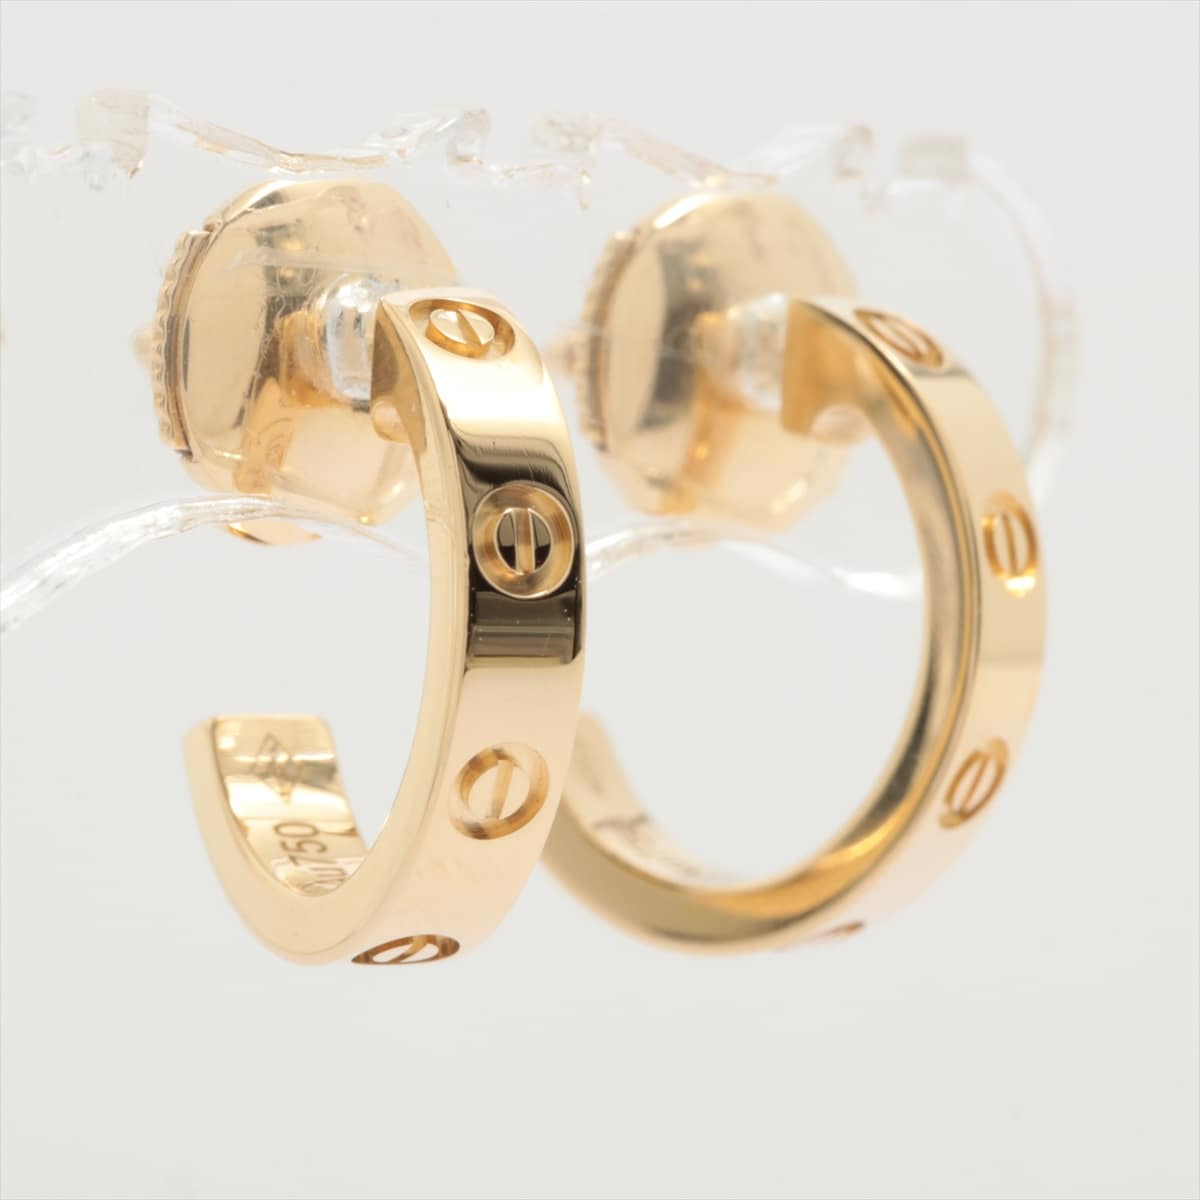 Cartier Mini Love Piercing jewelry 750(YG) 3.4g